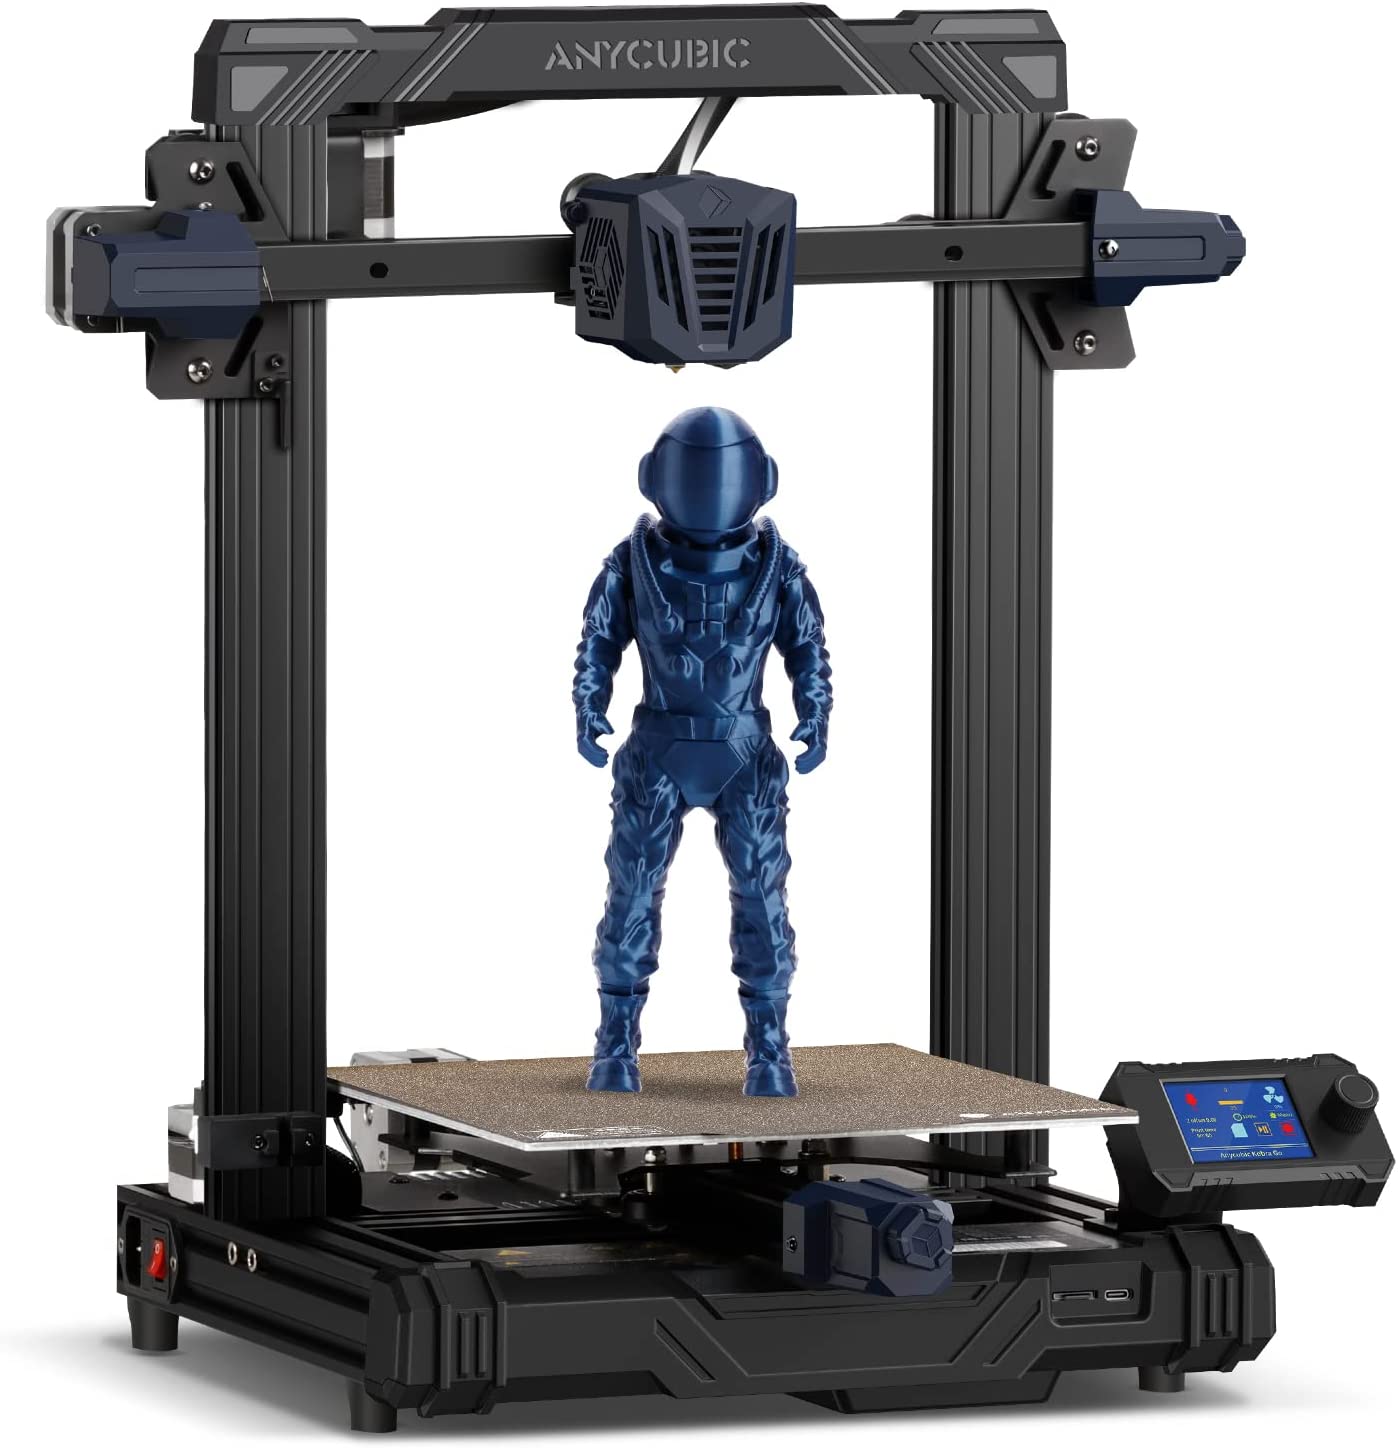  3. ANYCUBIC MEGA X 3D Printer 